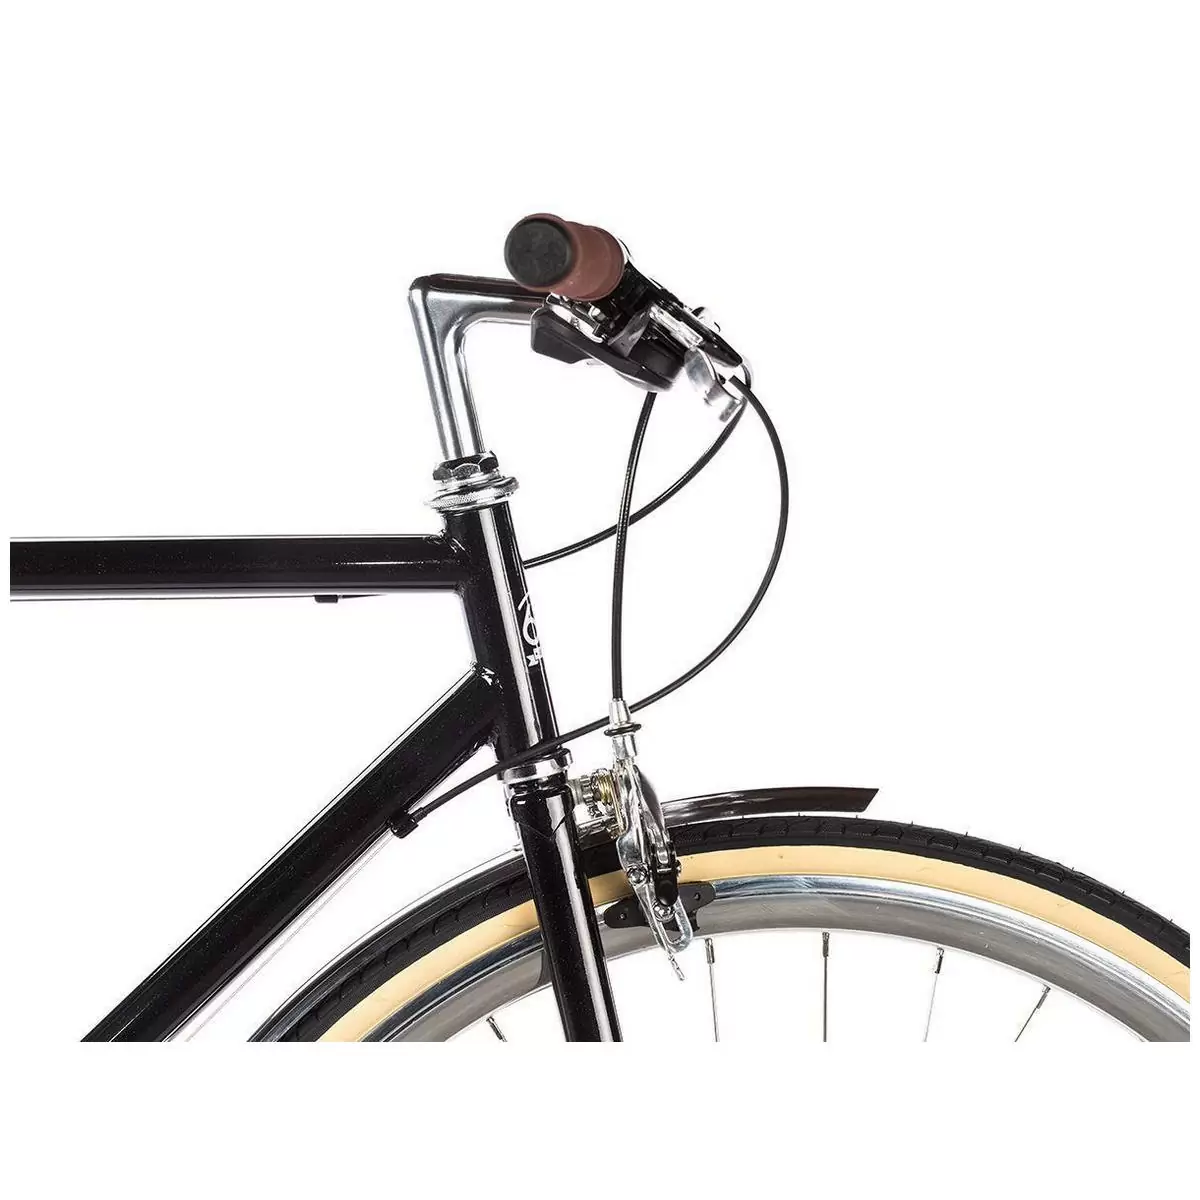 Bicicleta urbana ODYSSEY 8spd Delano preta grande 58cm #3